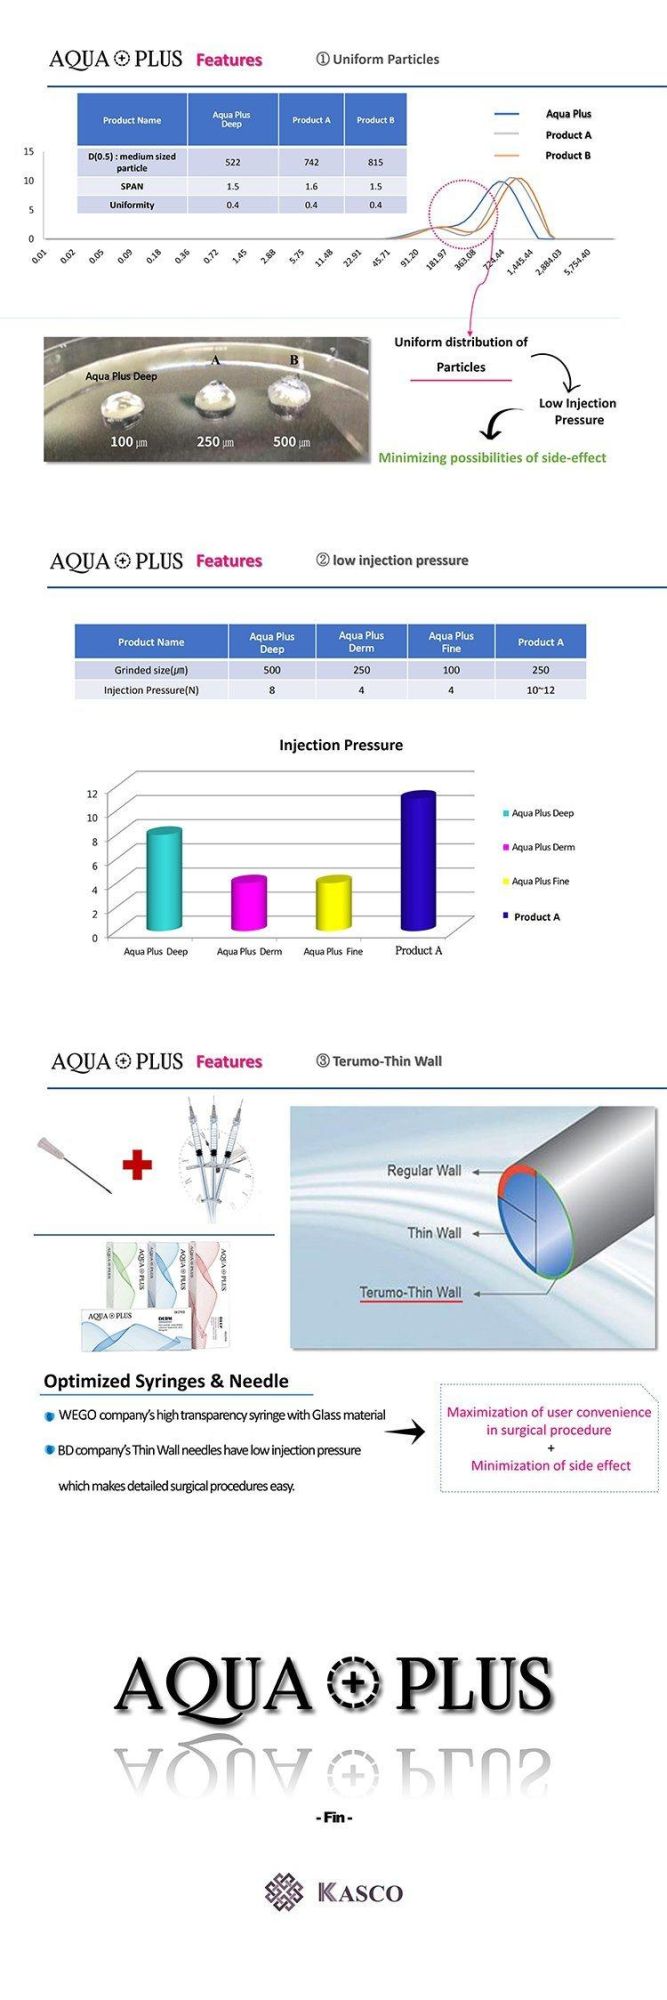 2021 Hong Kong Aqua Plus Lip Filler Hyaluronic Acid Gel Injection Dermal Filler